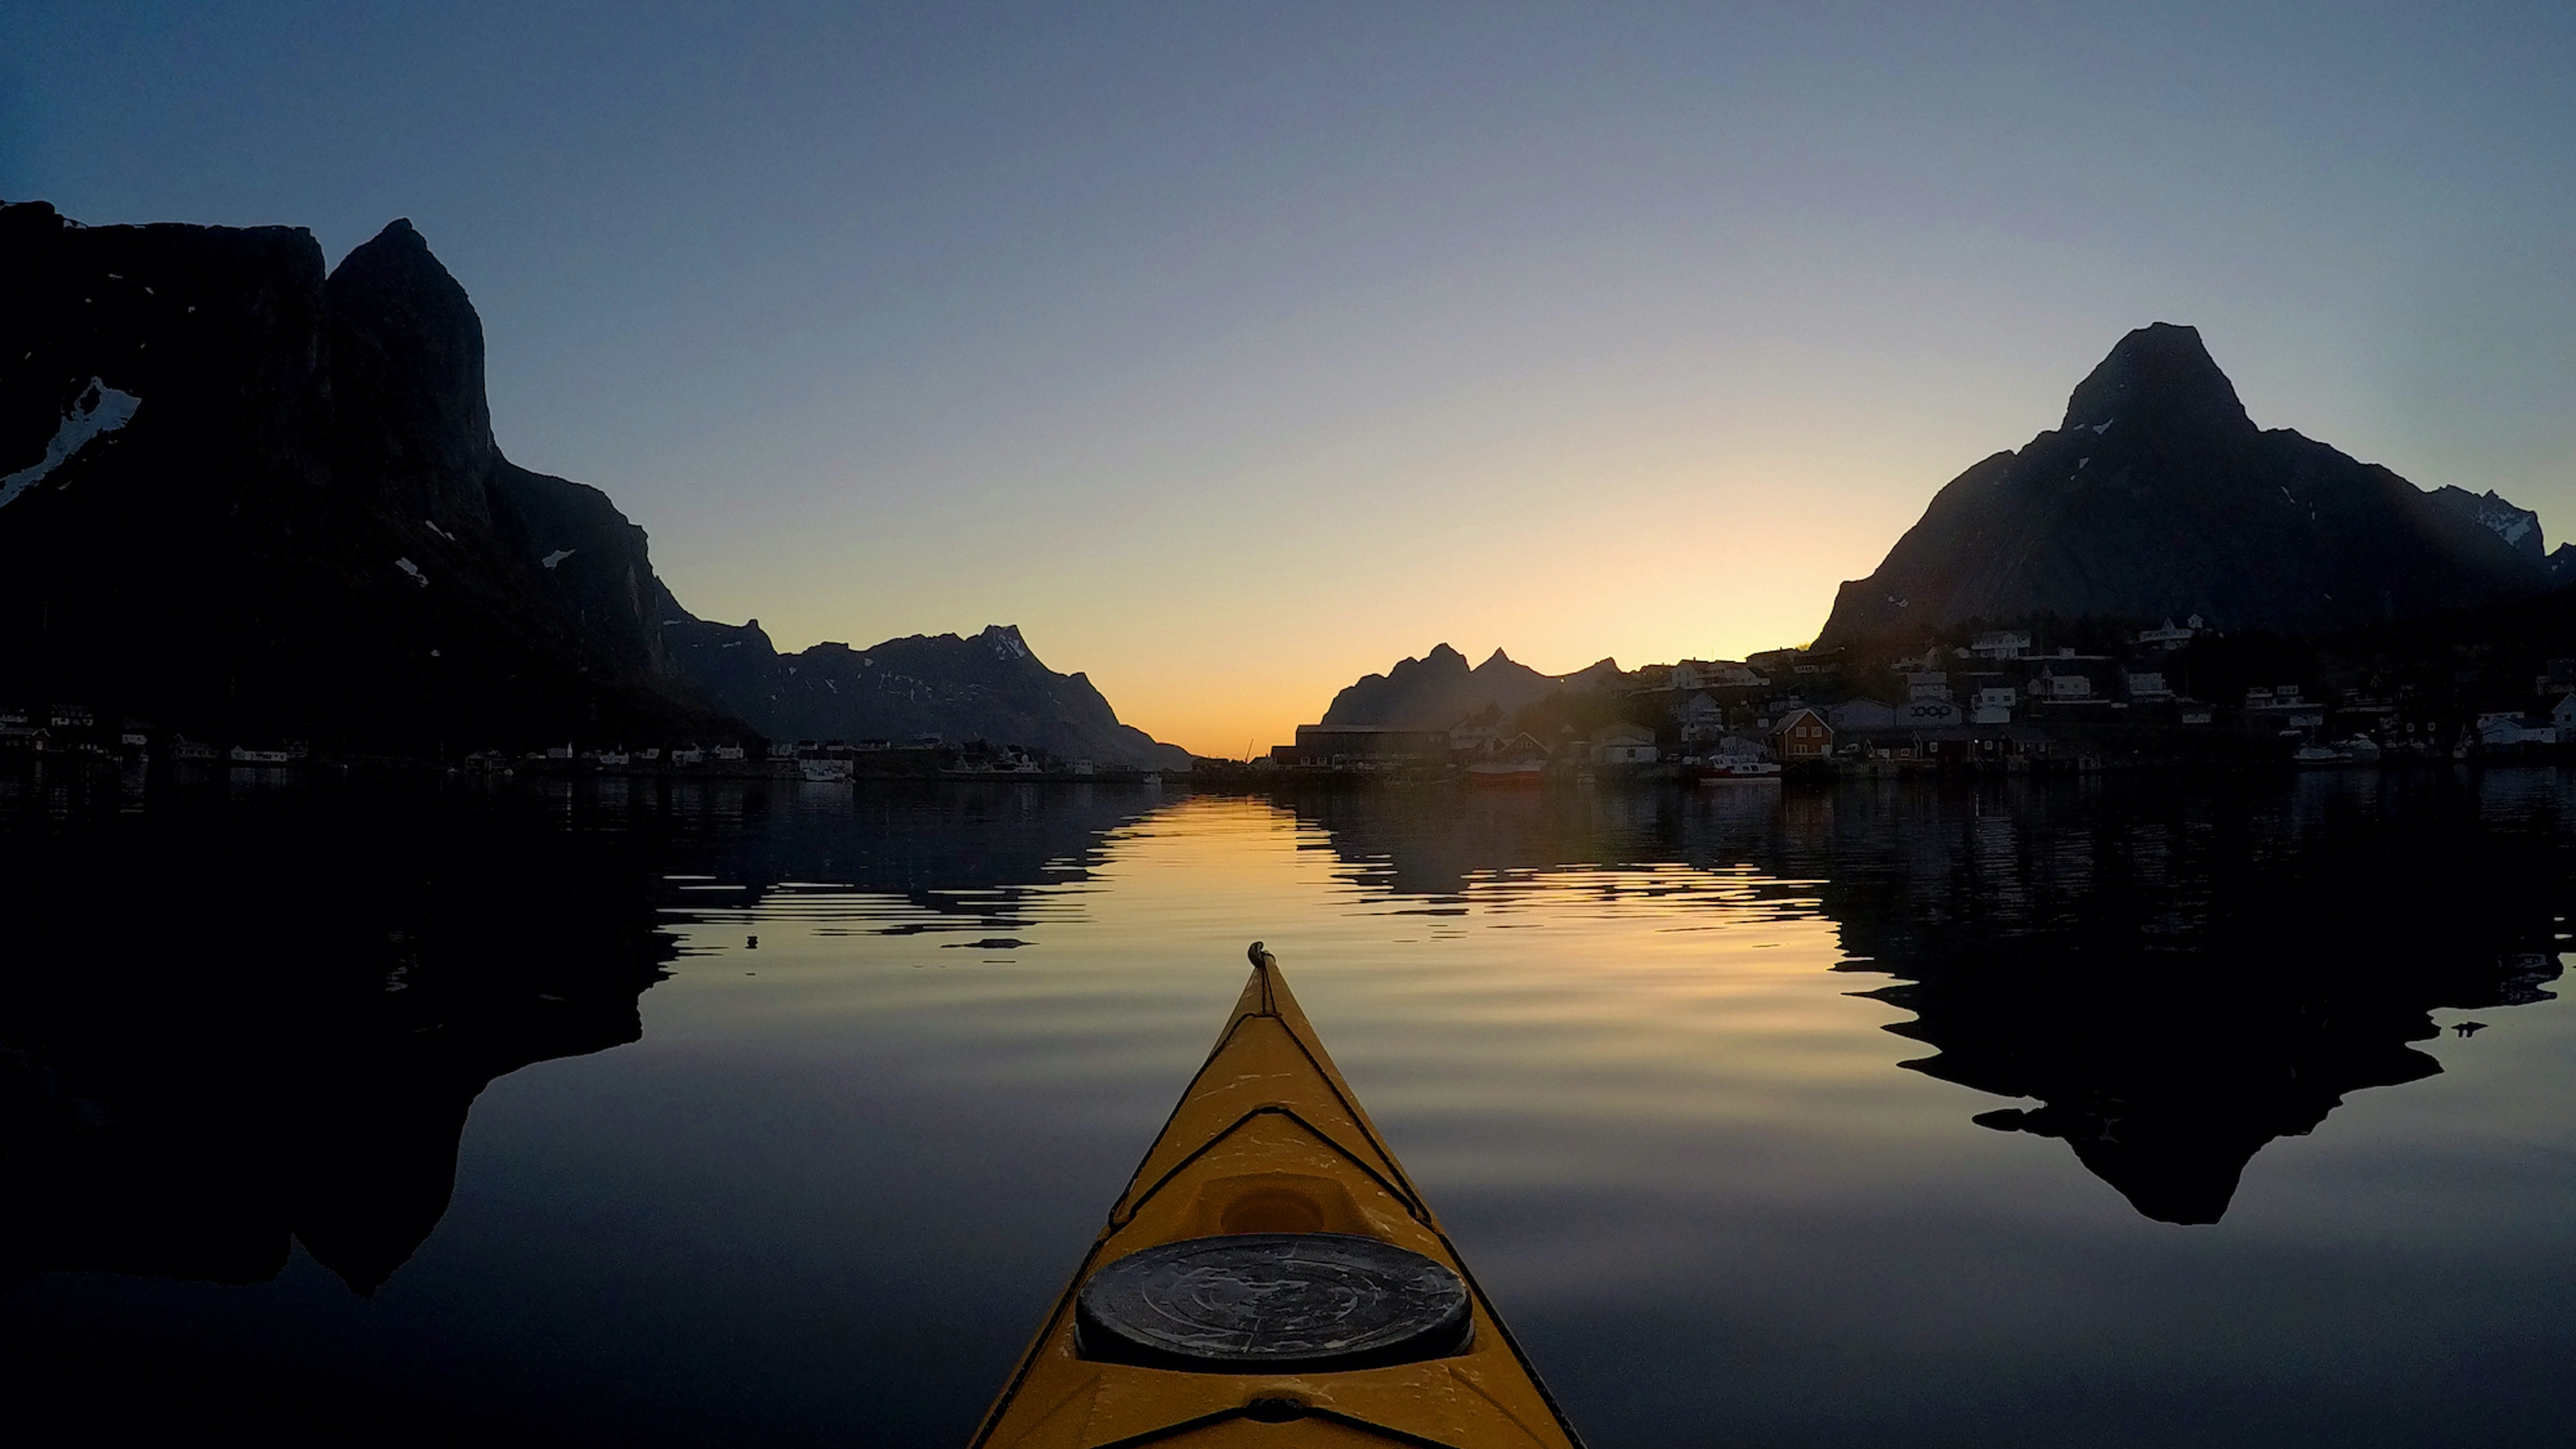 Guided kayak trip in Lofoten, paddling under the midnight sun - Reine, Lofoten, Norway